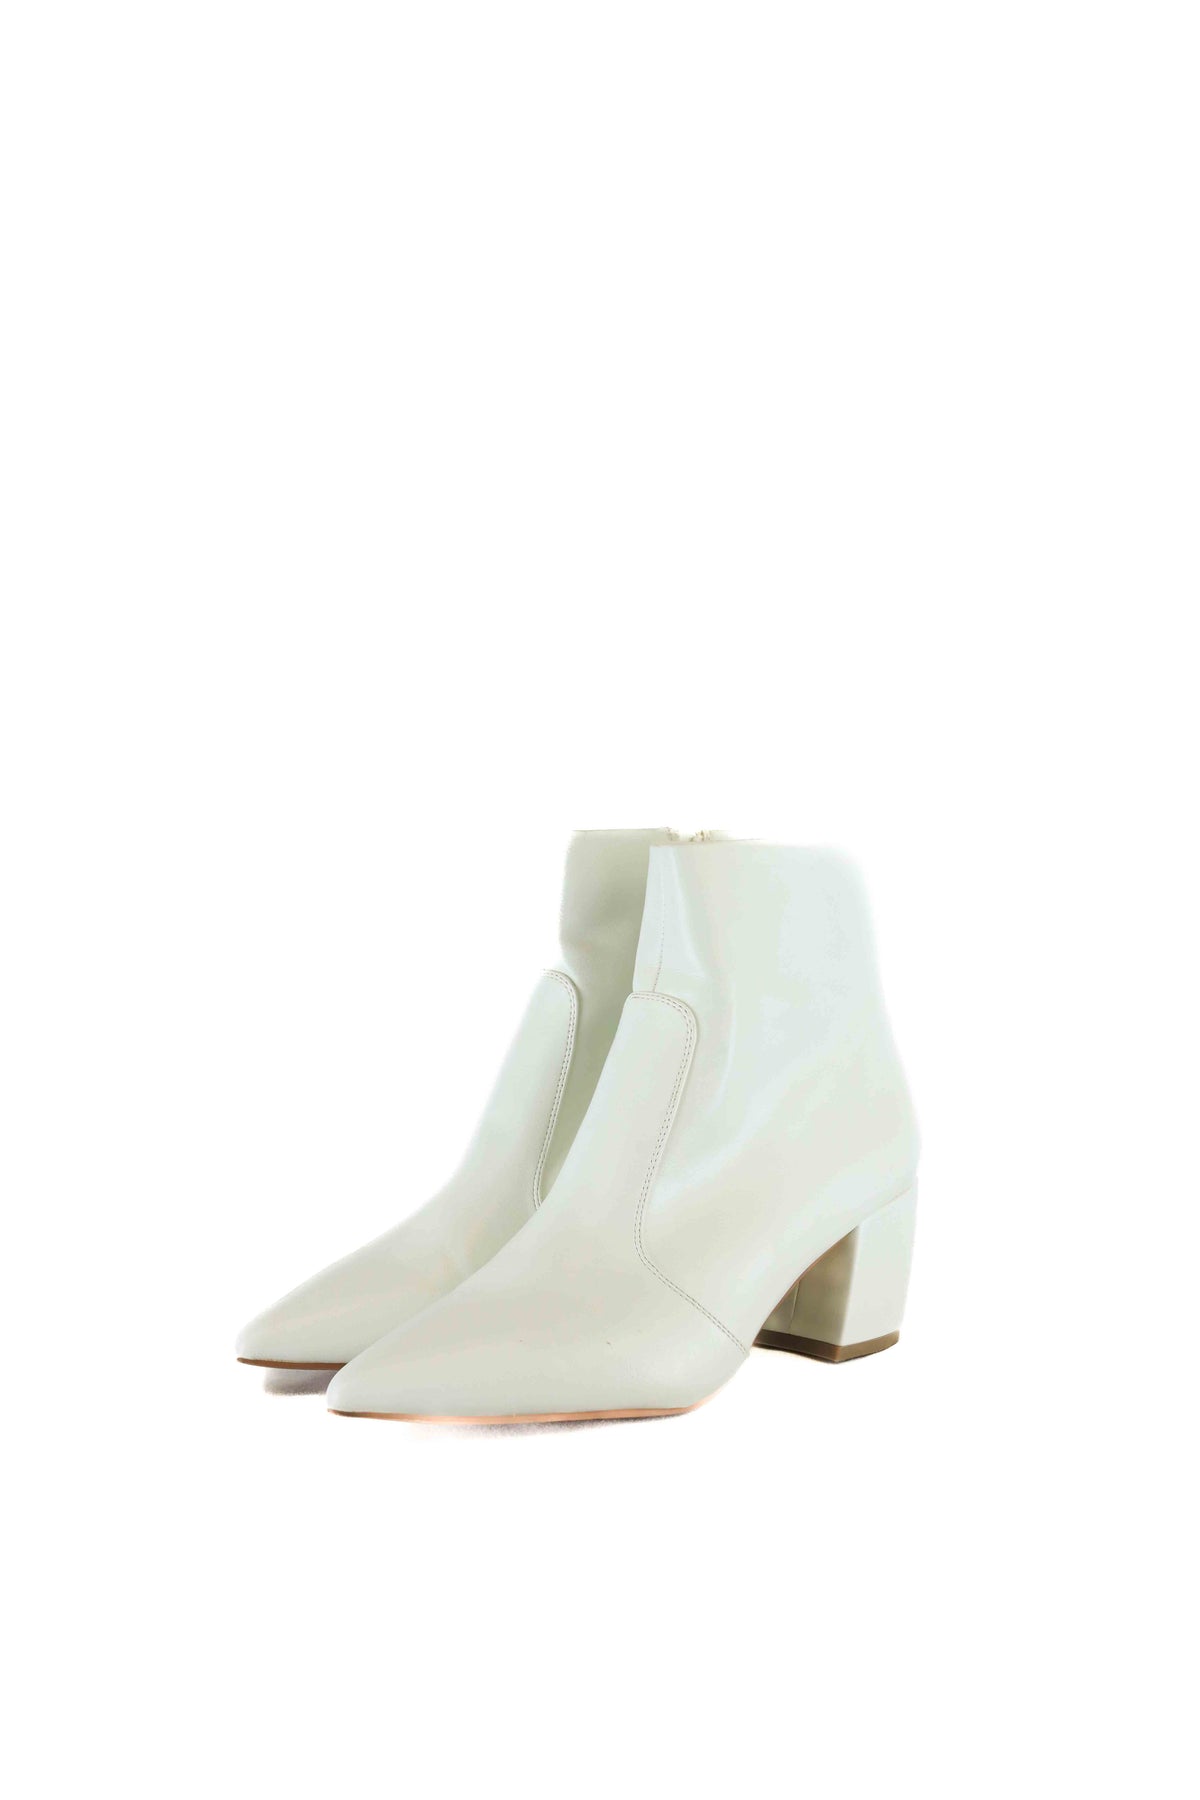 Betts White Ankle Boots AU/US 9 (EU 40)